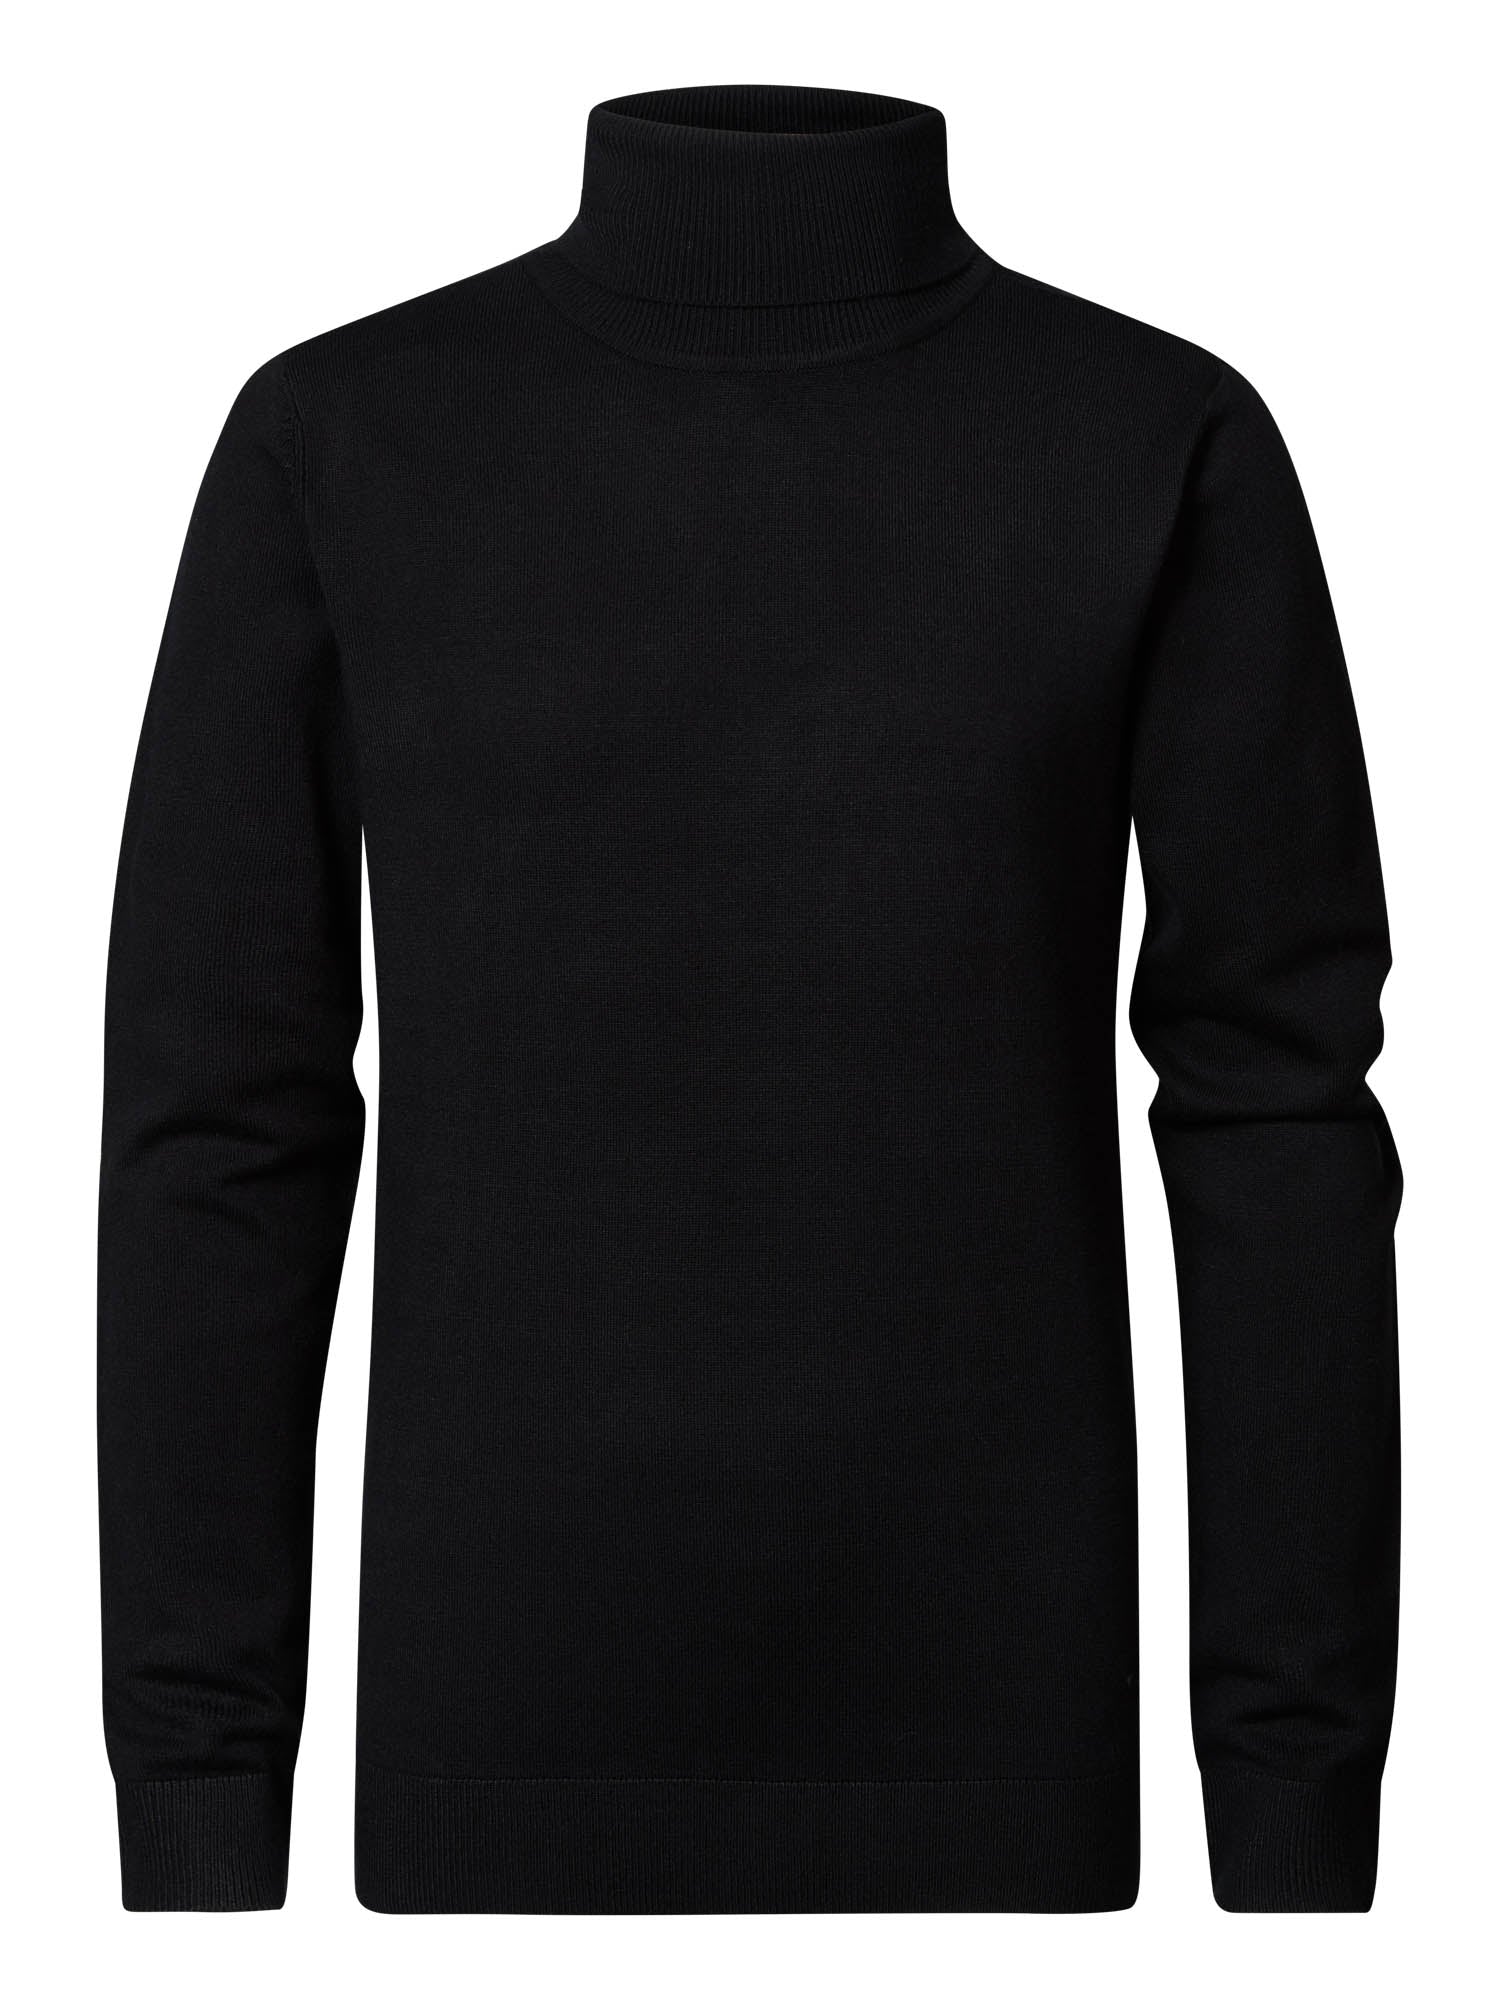 Jongens Boys Knitwear Collar Basic van Petrol in de kleur Black in maat 164.